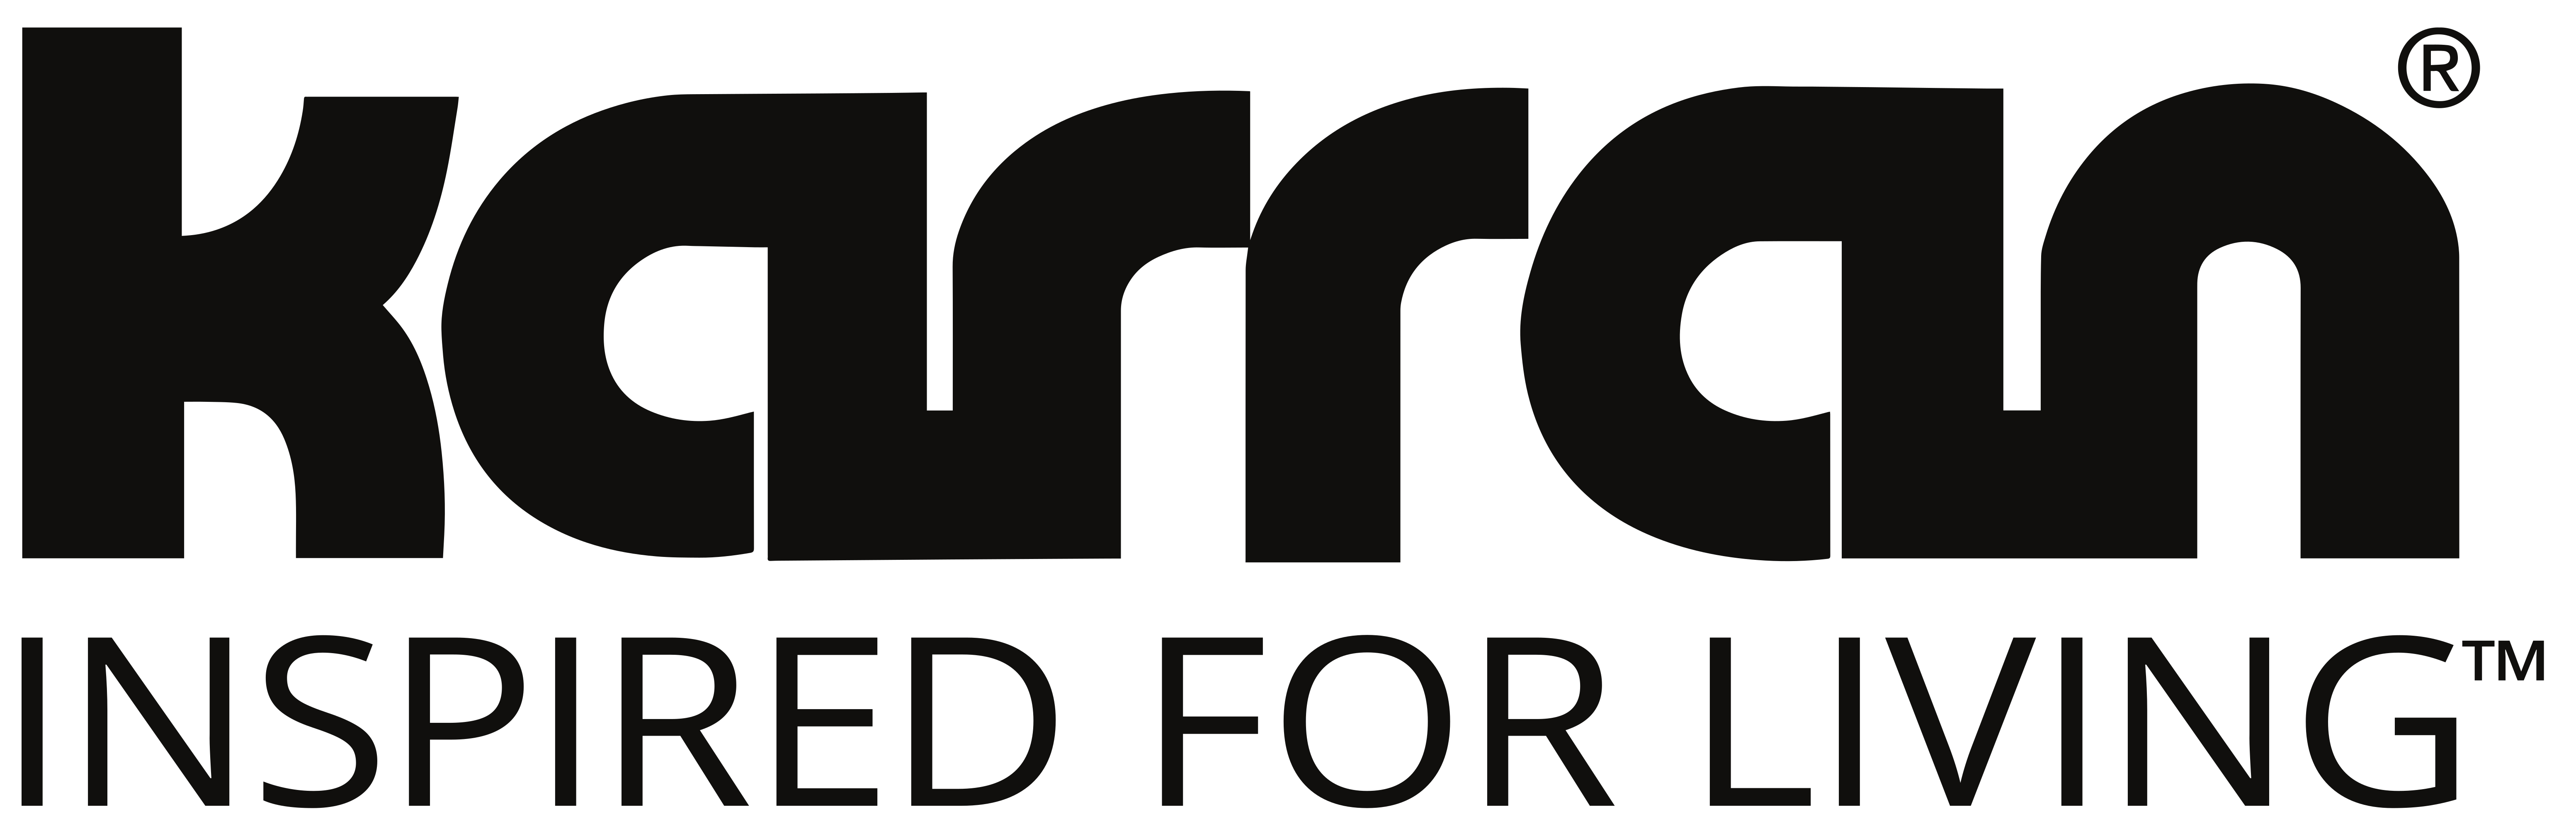 Karran logo and wordmark